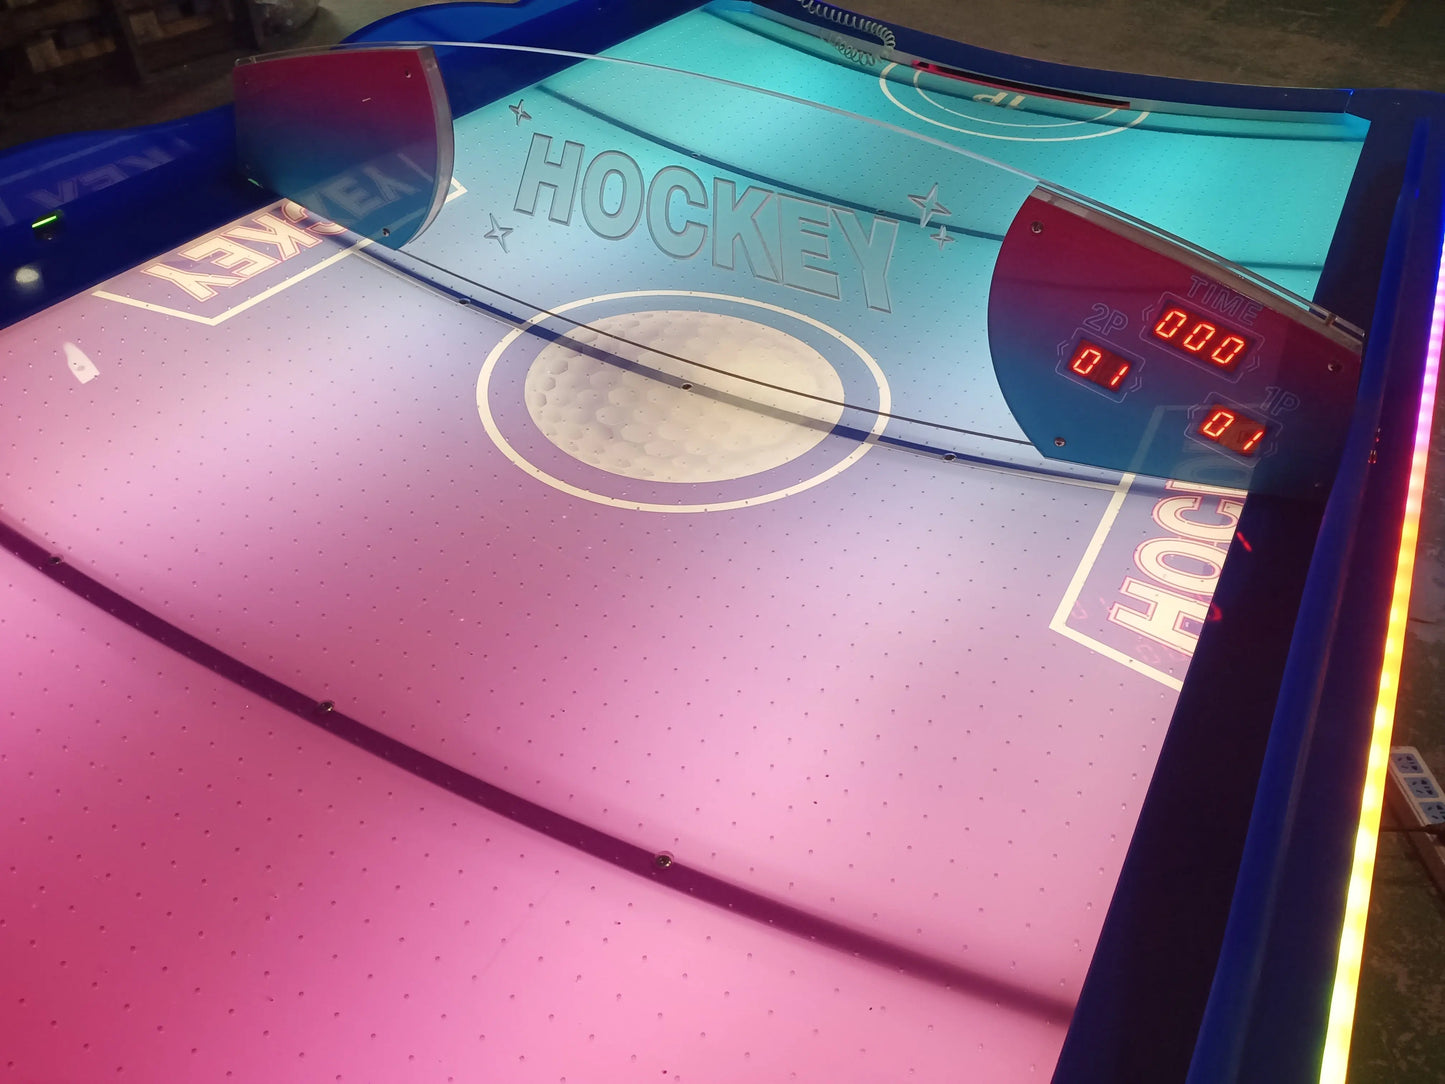 Curved-Surface-Air-Hockey-Arcade-Game-Machine-Classic-Sport-Air-Hockey-Table-Tomy-Arcade 